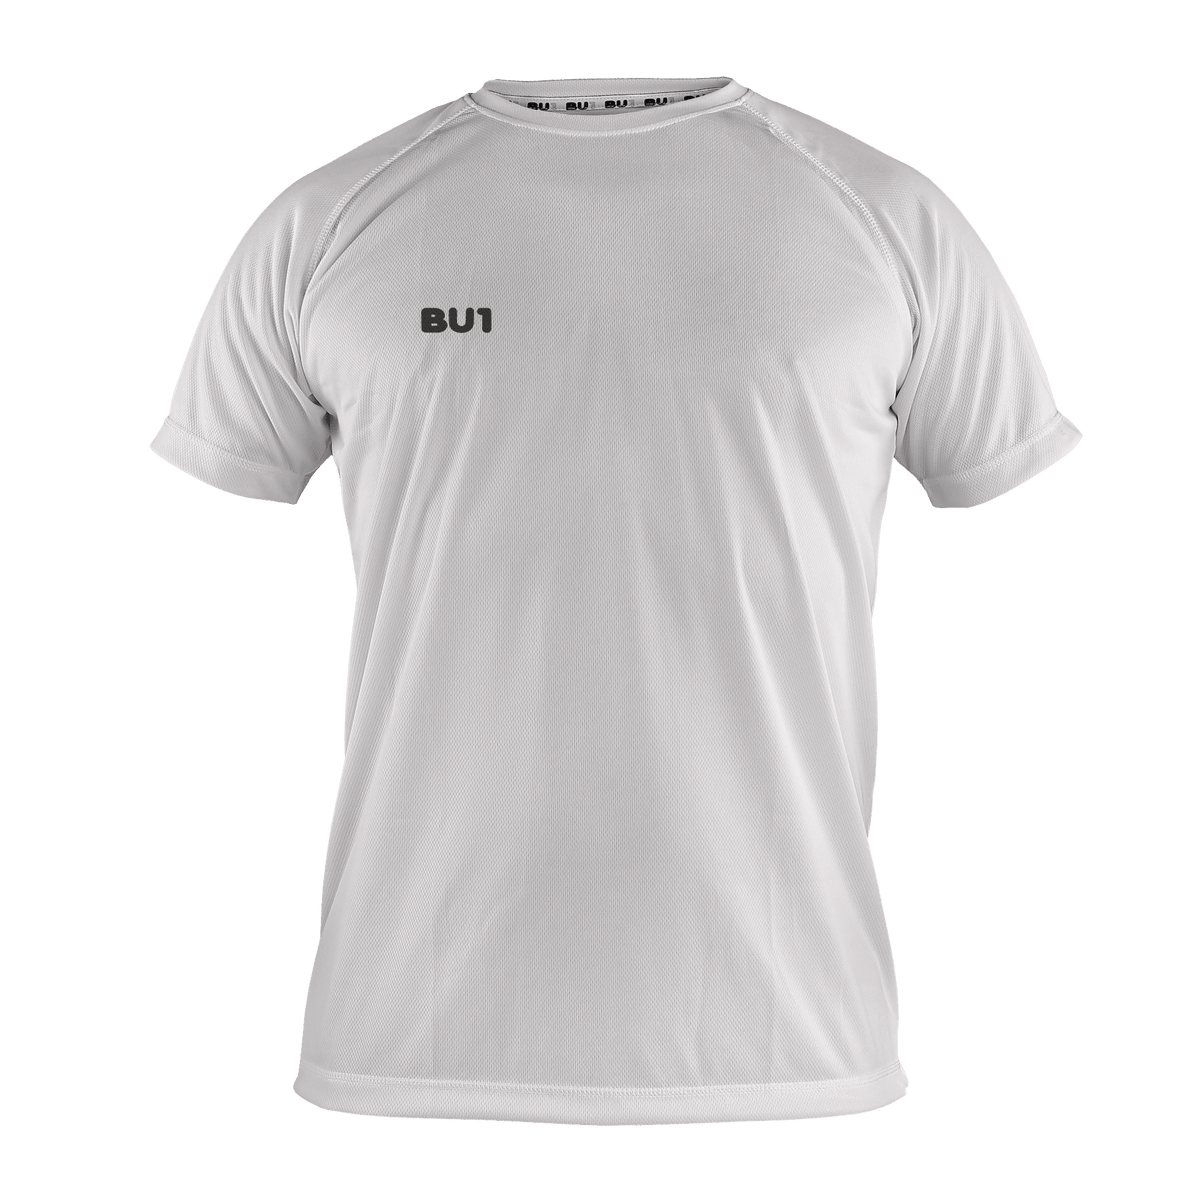 BU1 tréninkové tričko bílé